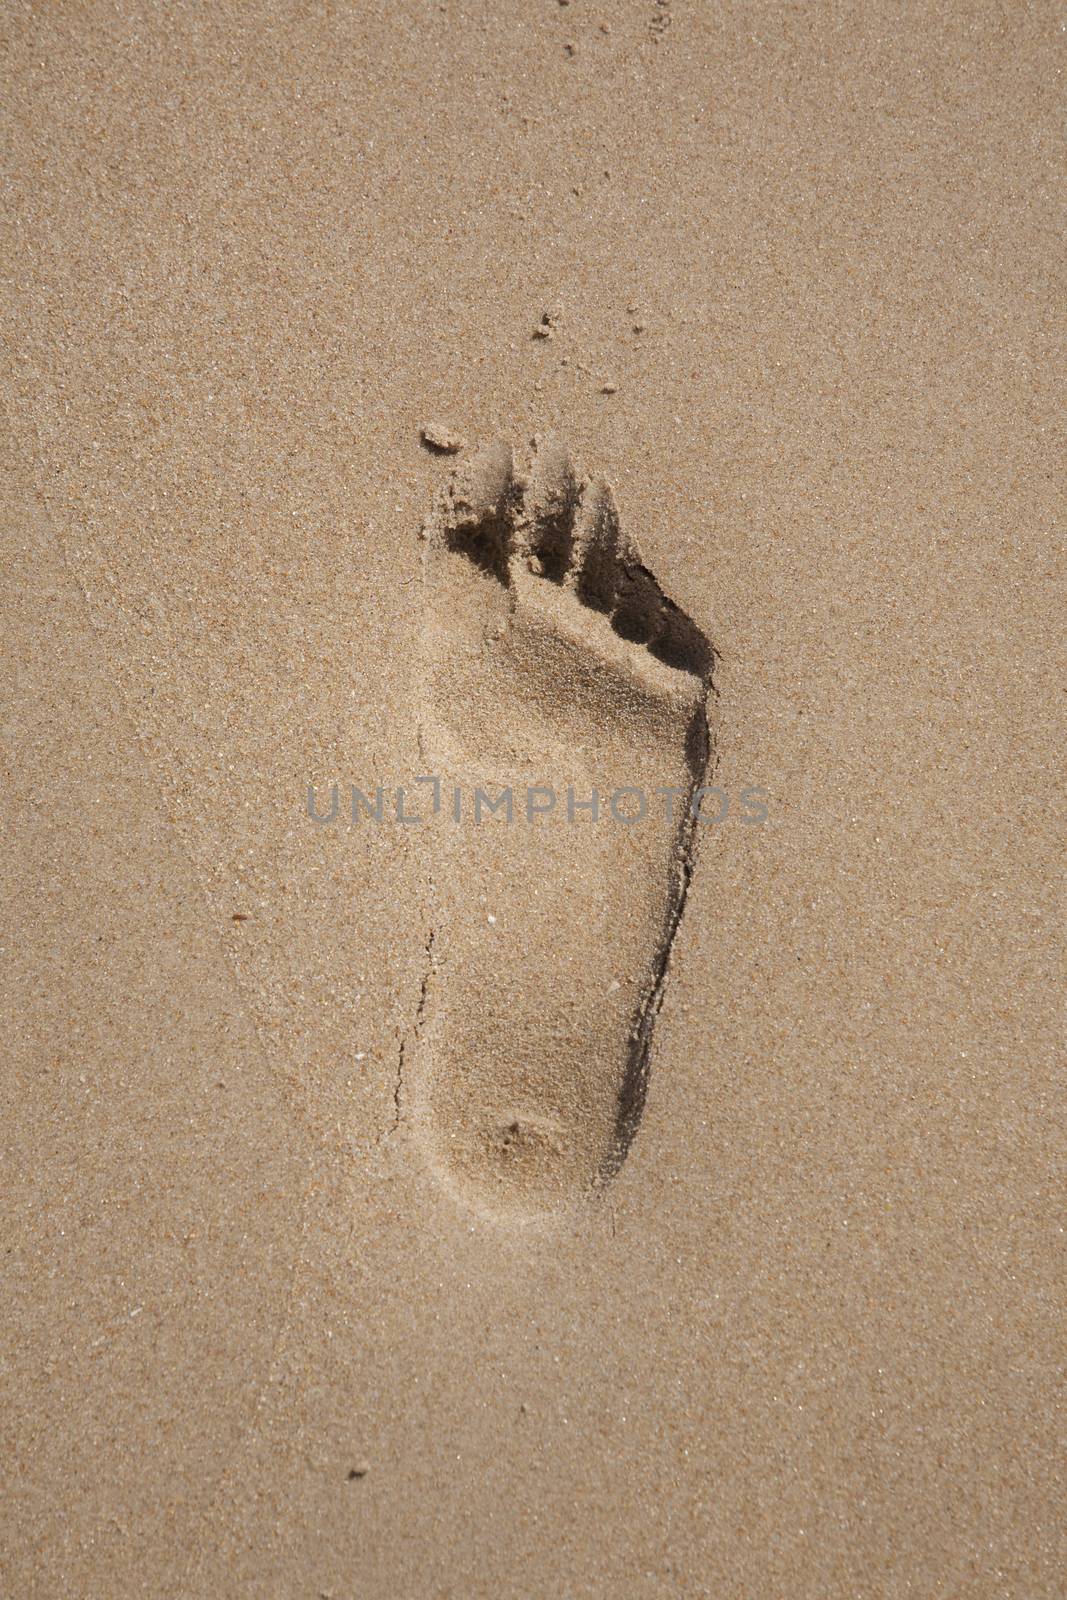 footprint one right feet on brown sand beach seaside